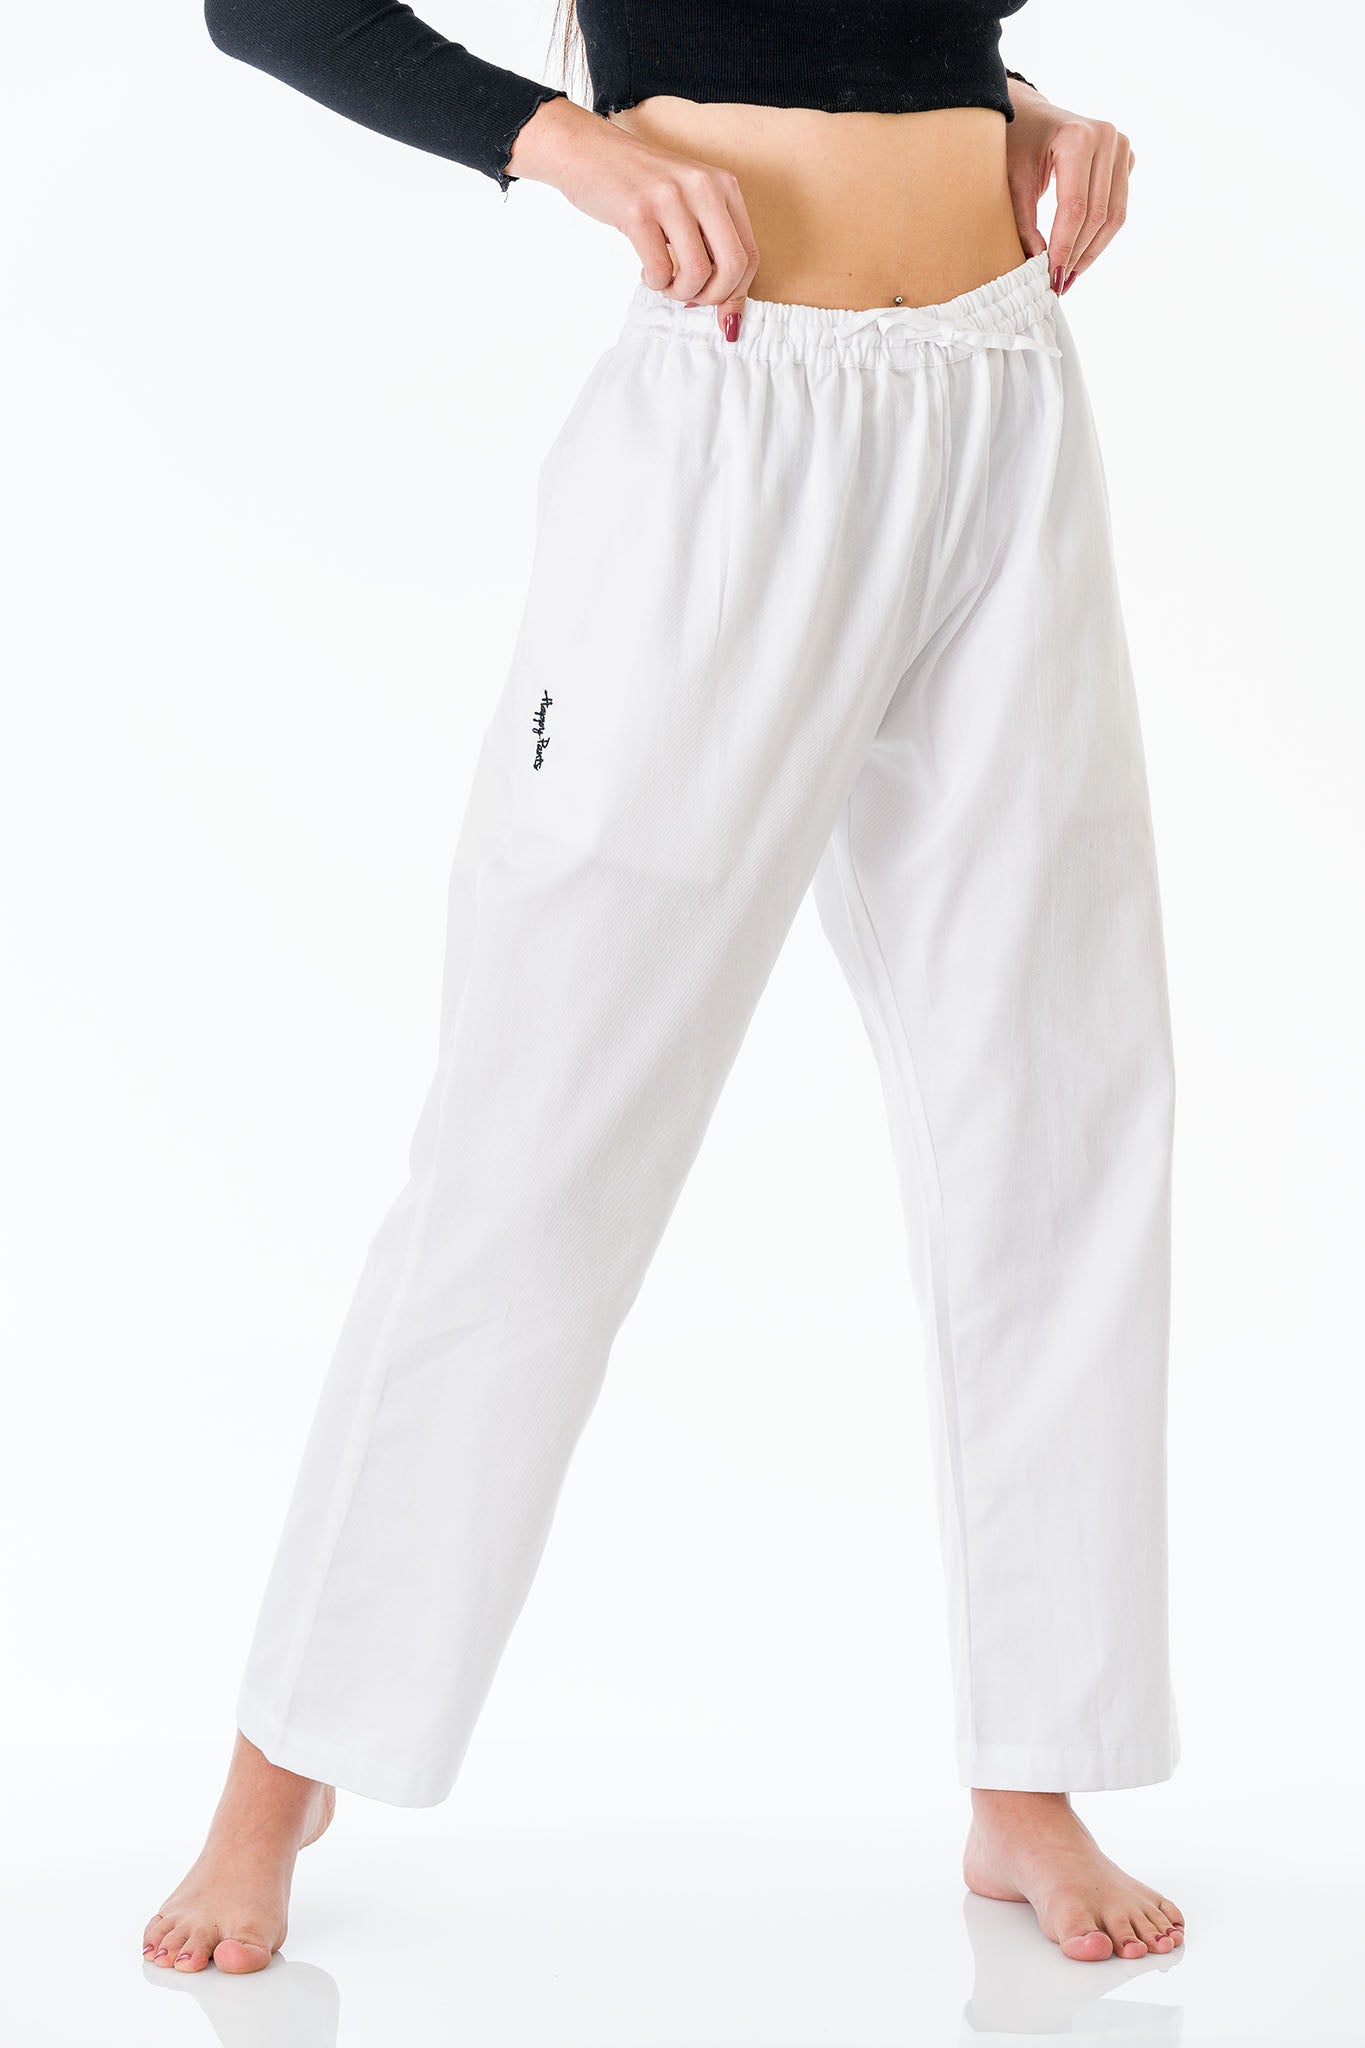 White cotton pants for women